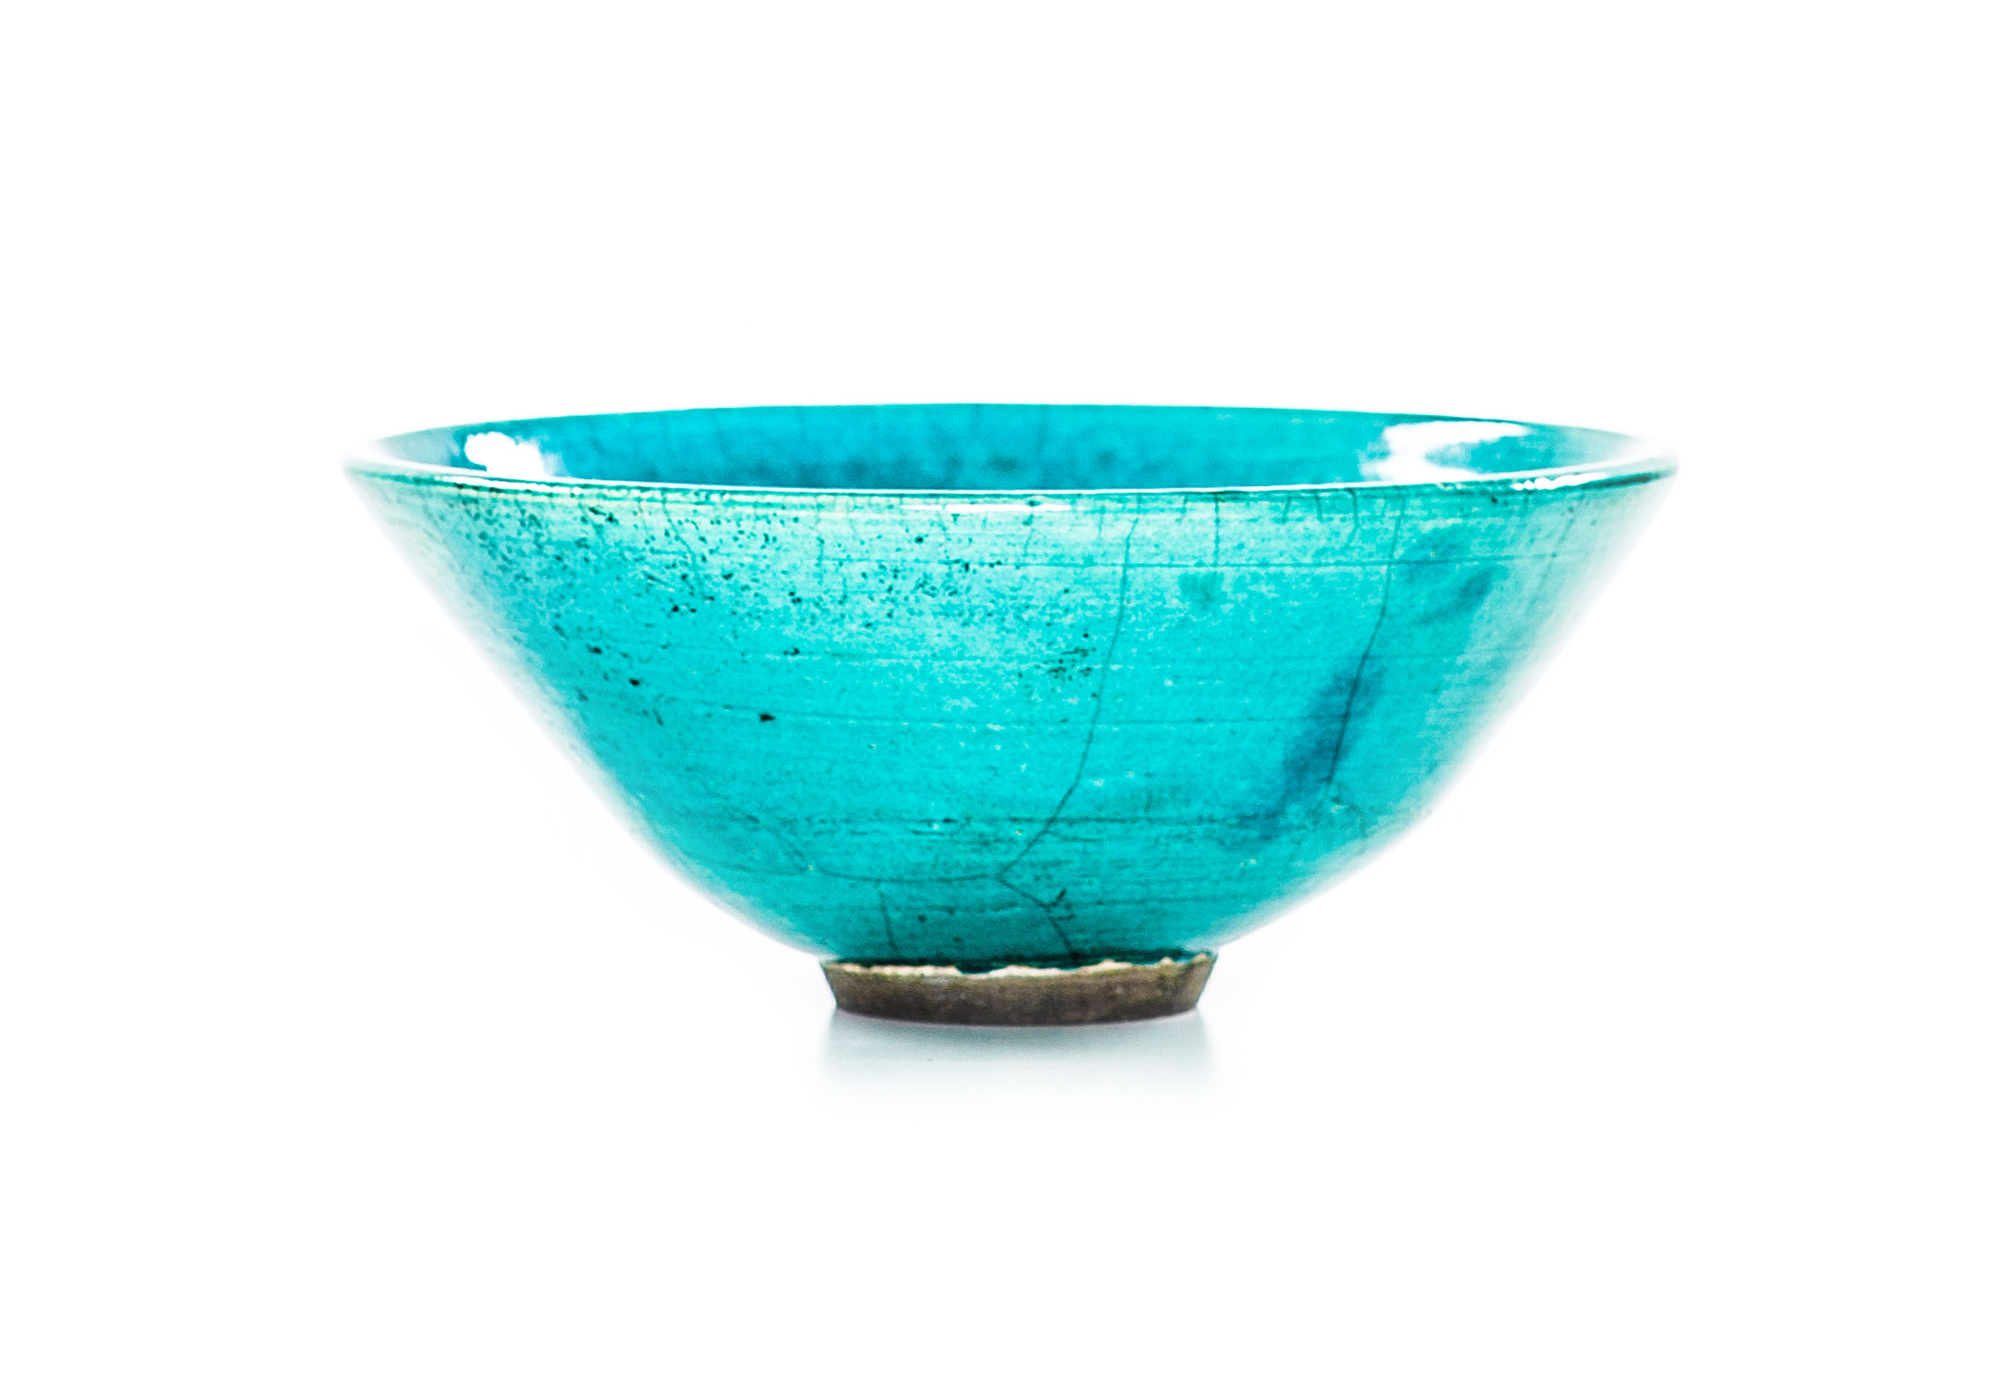 Turquoise raku bowl with copper